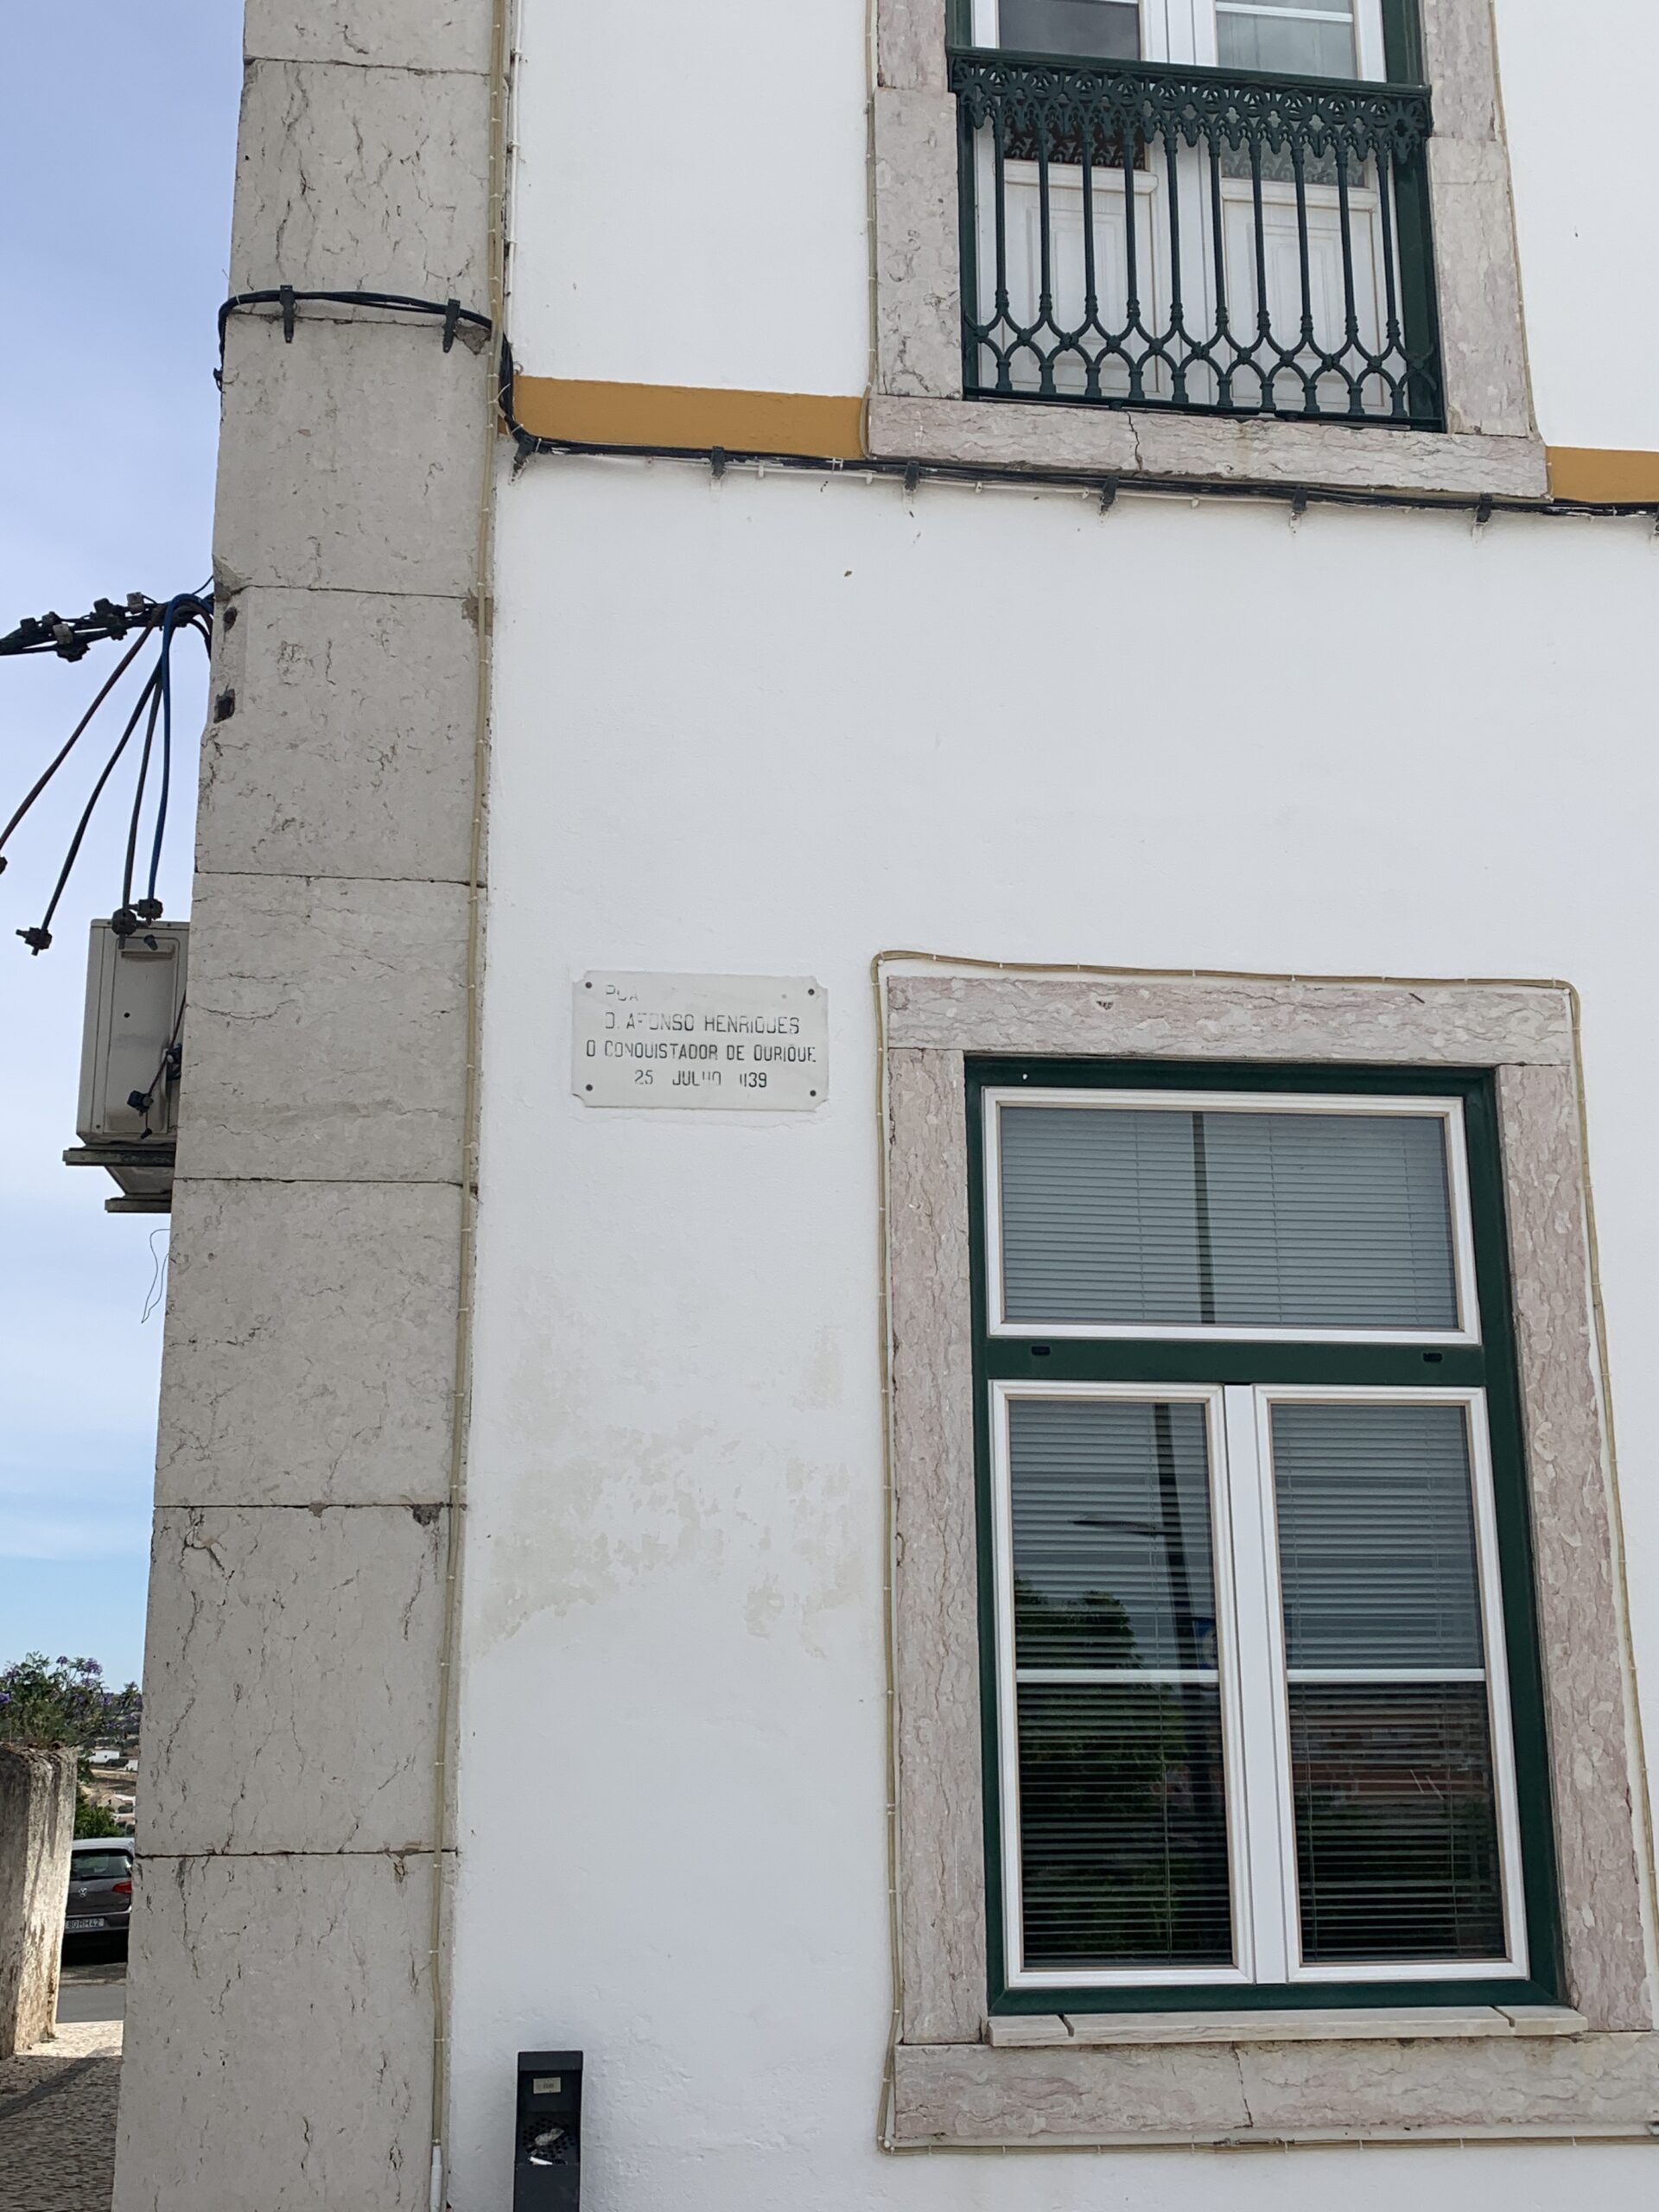 Street sign for Rua D. Afonso Henriques